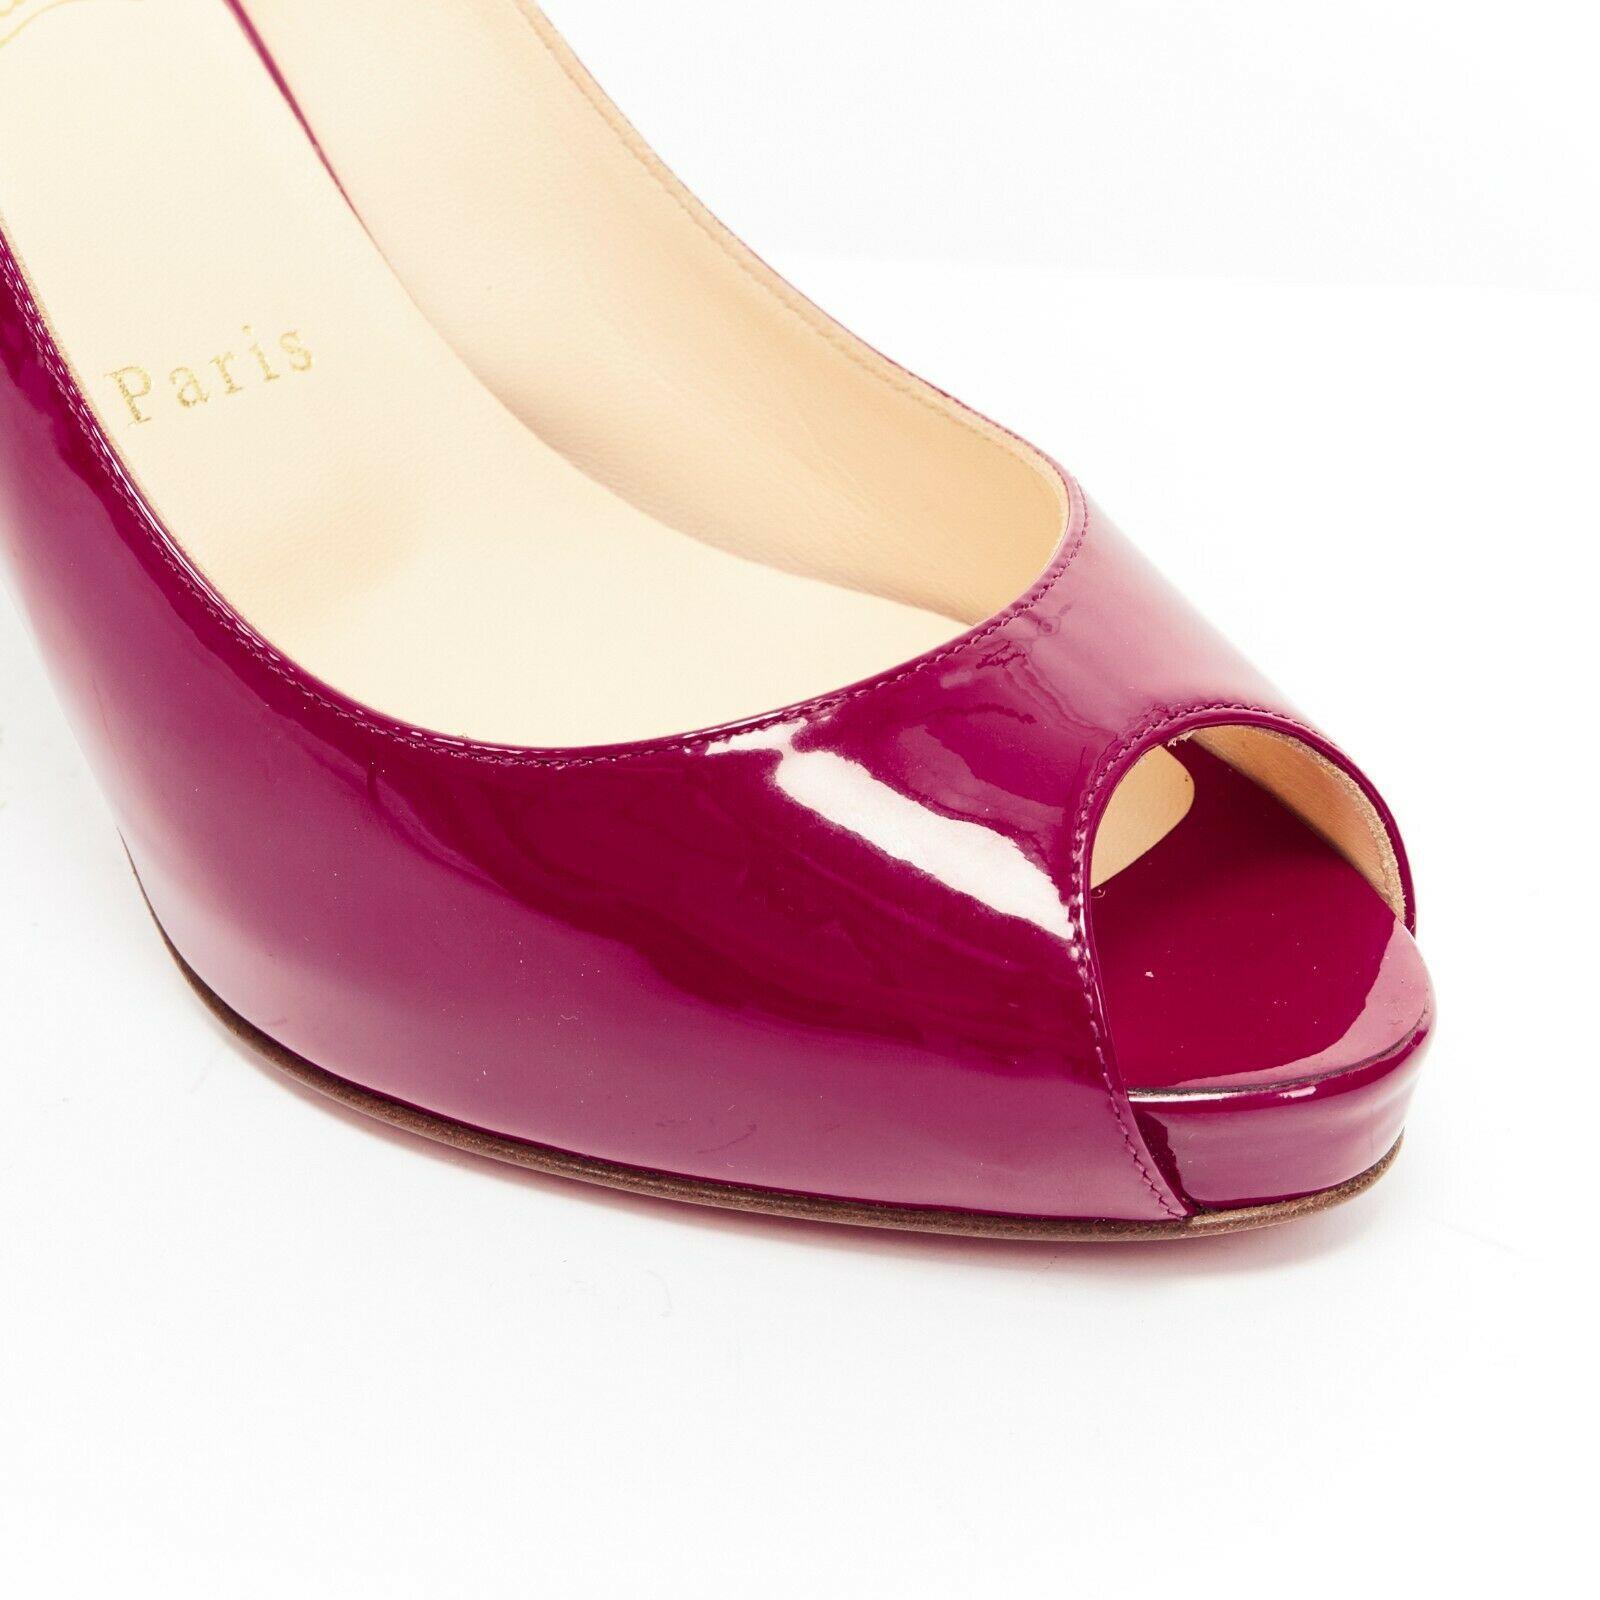 new CHRISTIAN LOUBOUTIN Mater Claude Sling 85 raspberry pink patent heels EU38.5 3